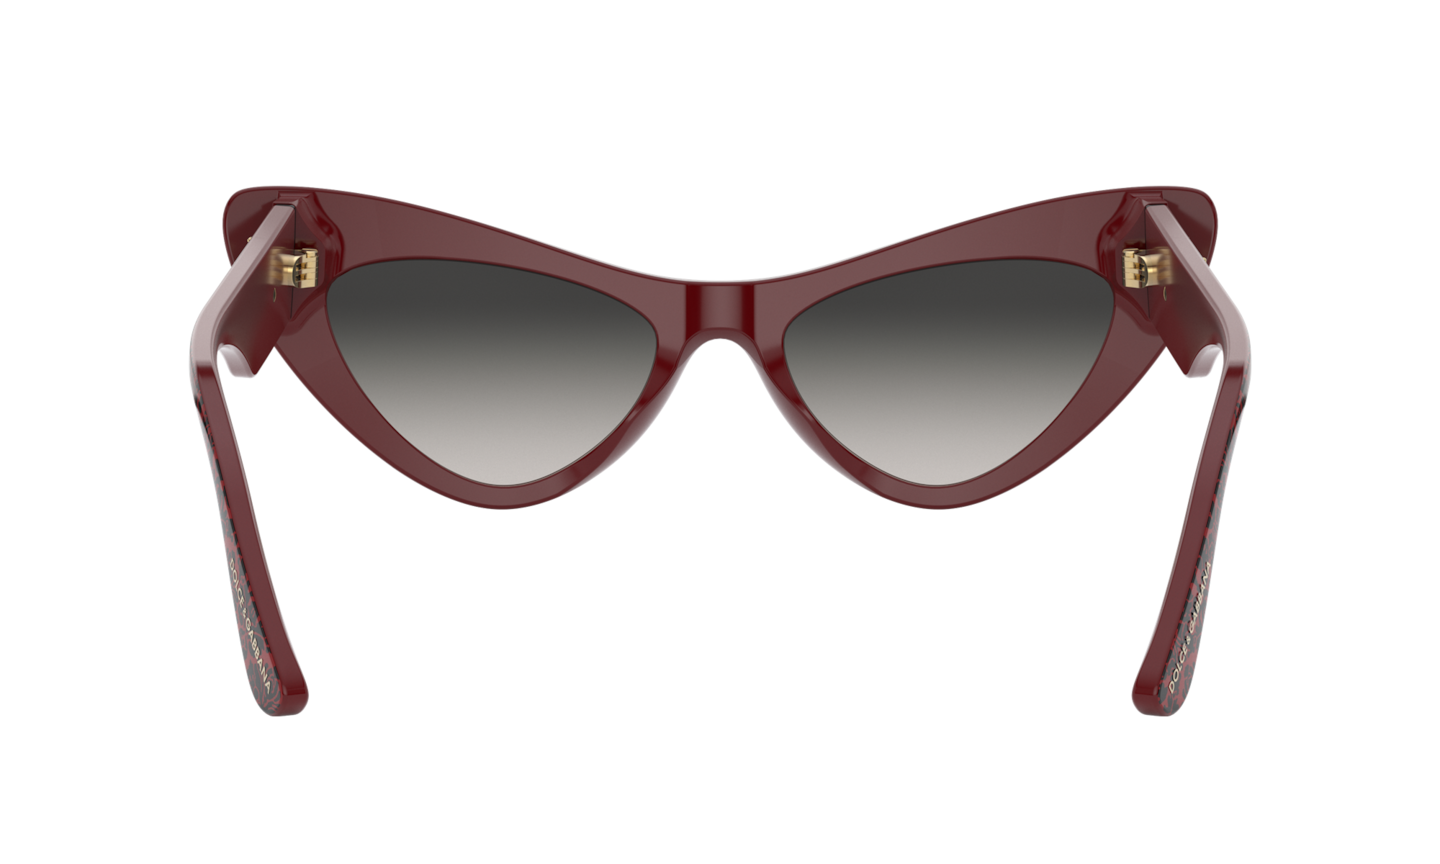 Dolce & Gabbana Damasco Black On Bordeaux Sunglasses | Glasses.com 